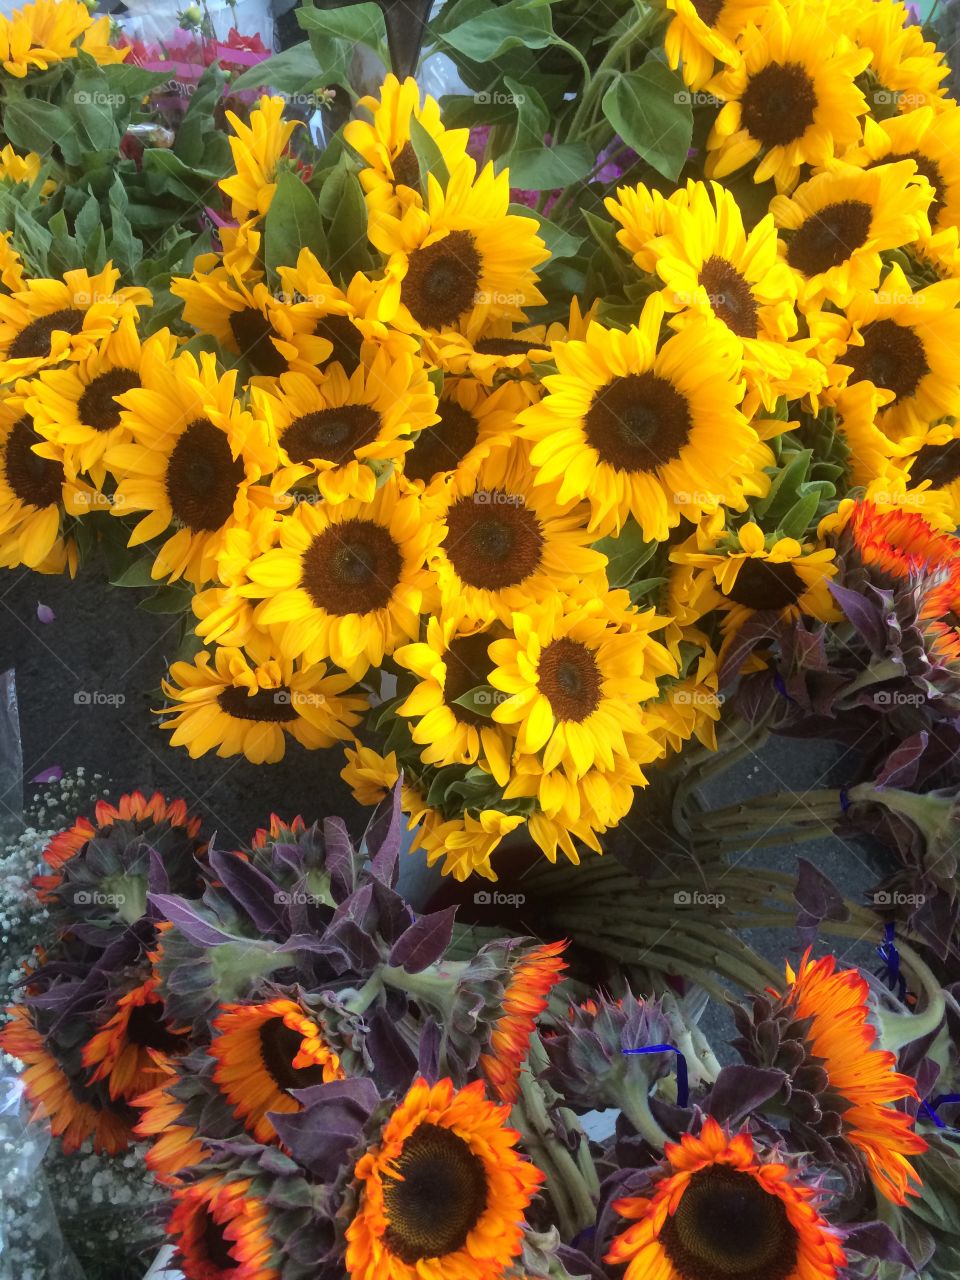 Sun flowers . Flowers at market